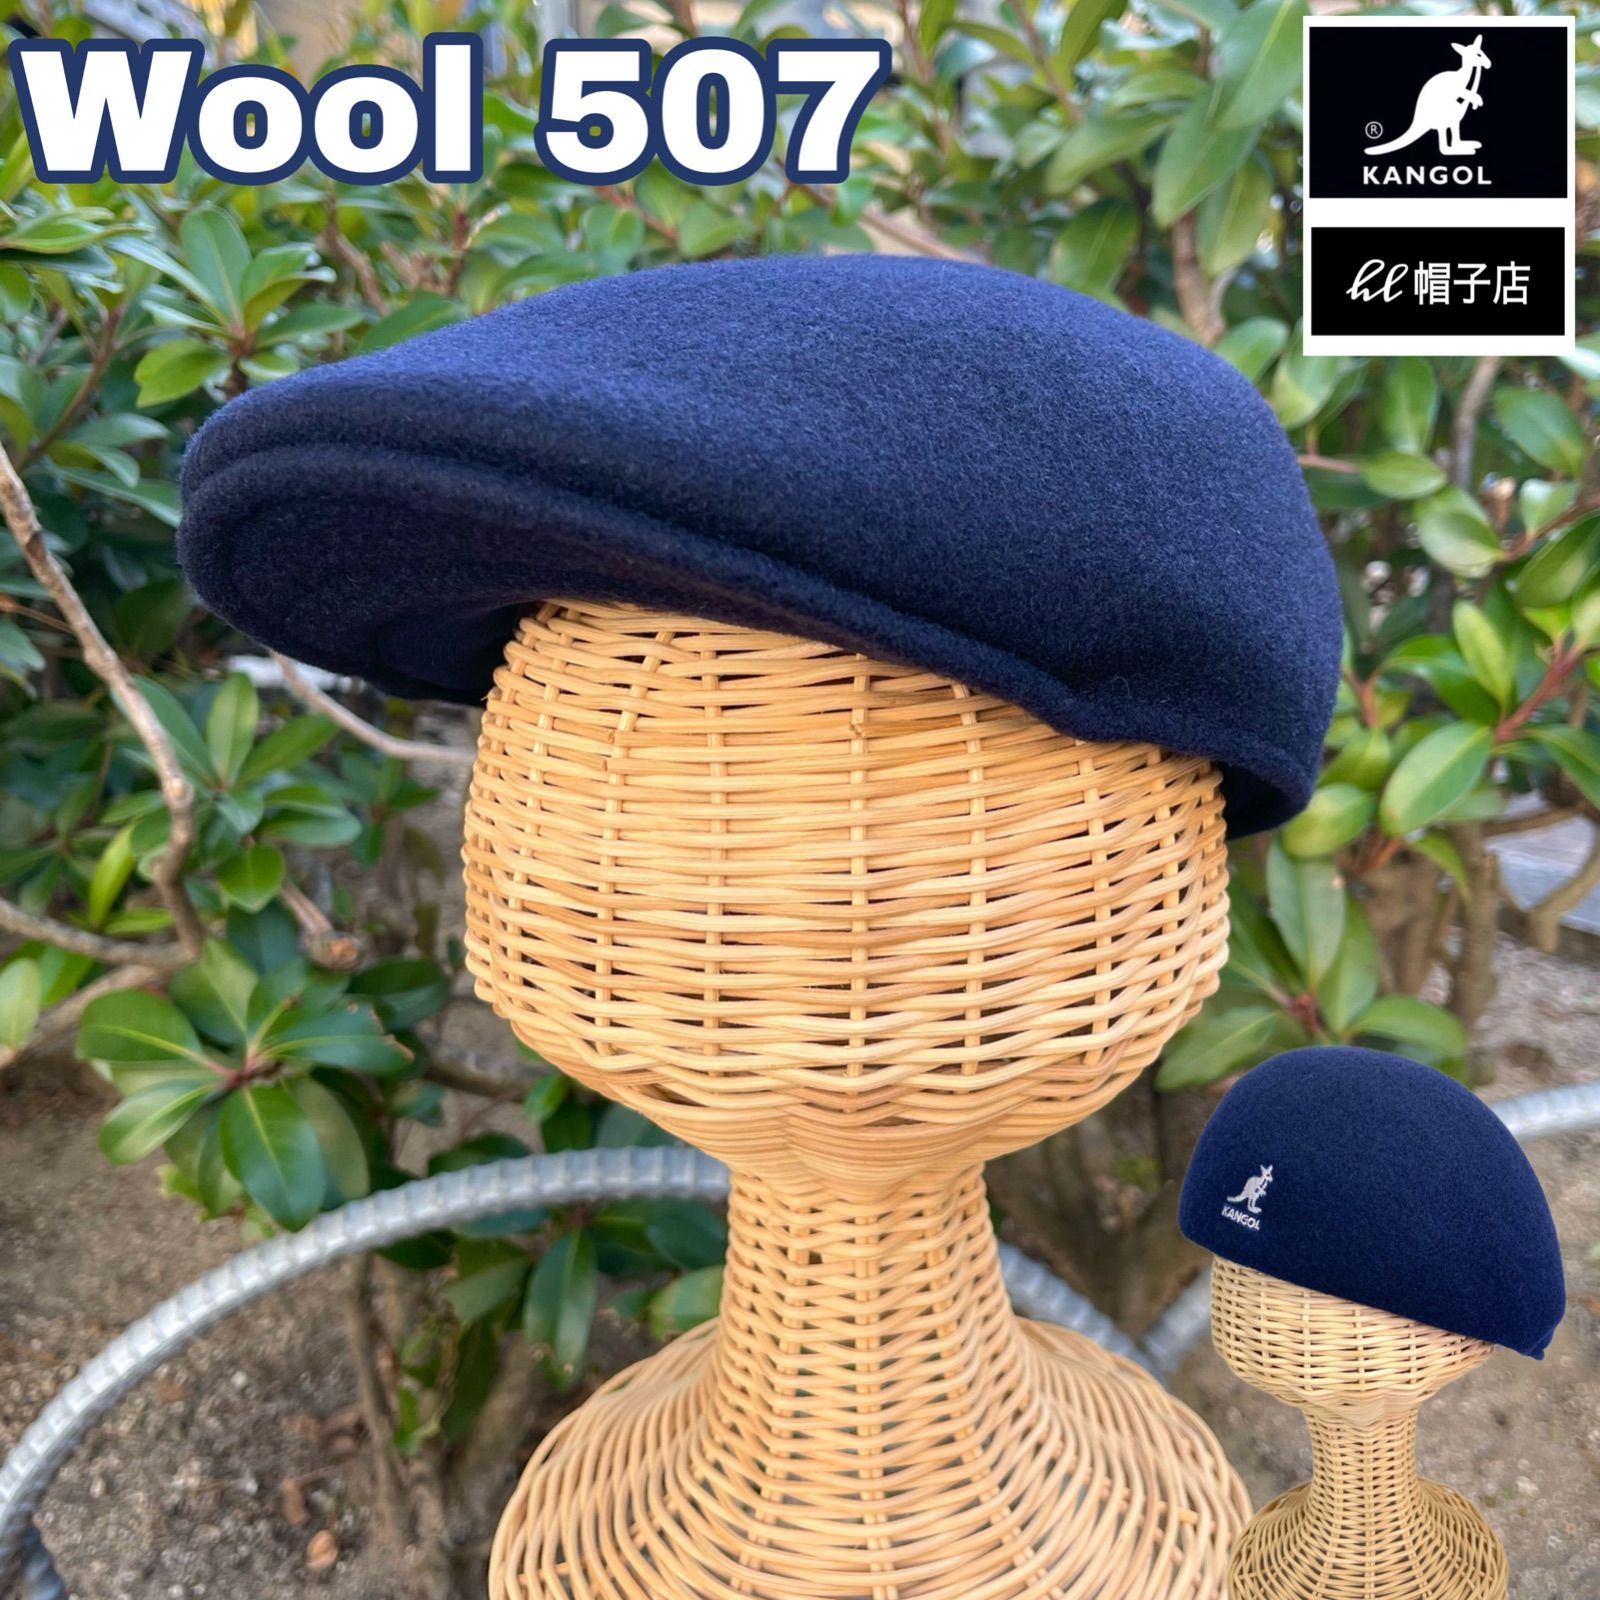 KANGOL 507 メッシュ素材 ハンチング ホワイト Mサイズ - 帽子